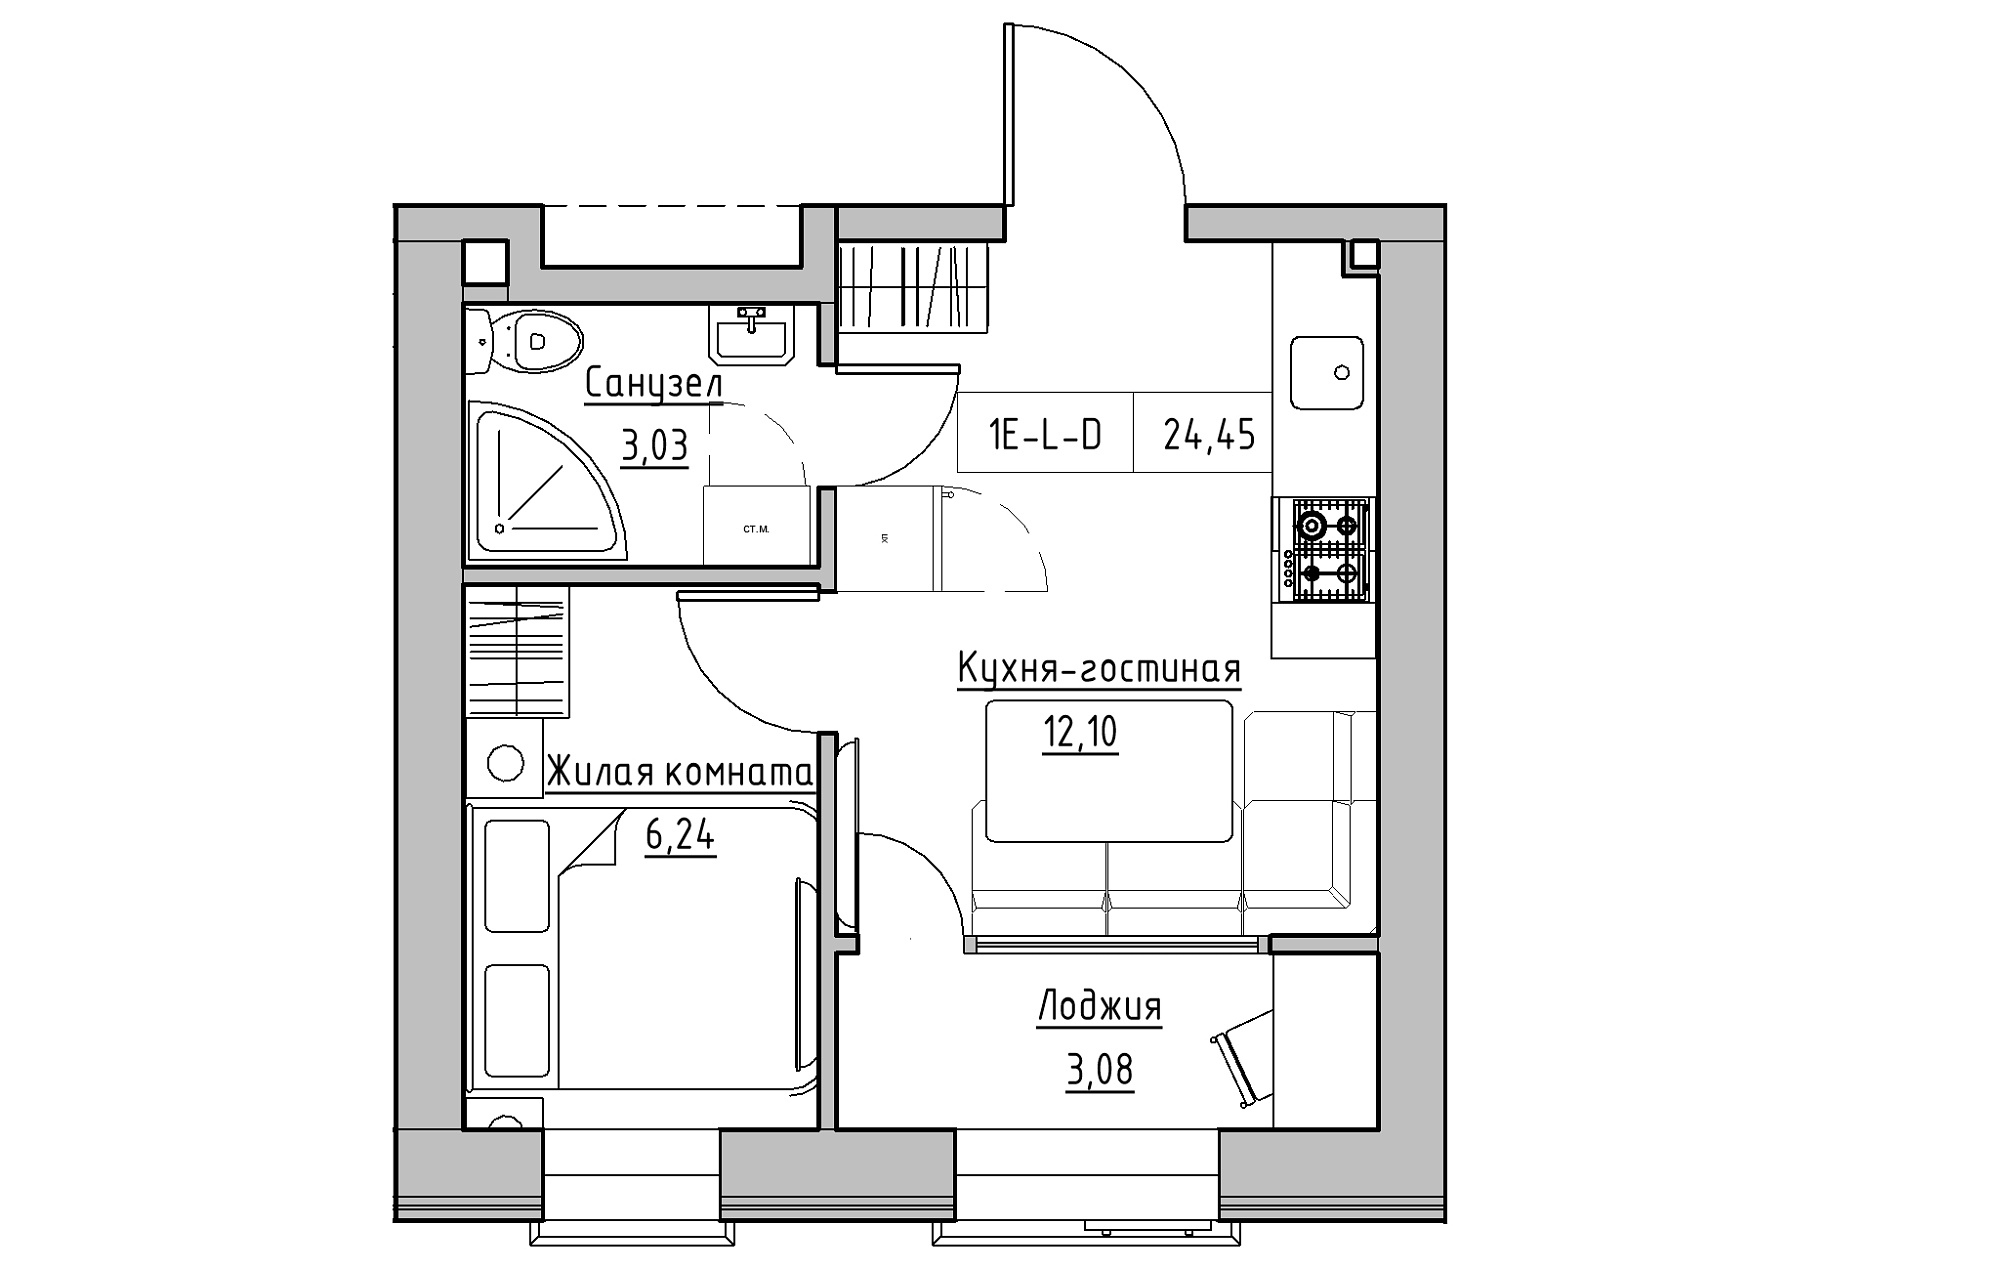 Planning 1-rm flats area 24.45m2, KS-018-05/0002.